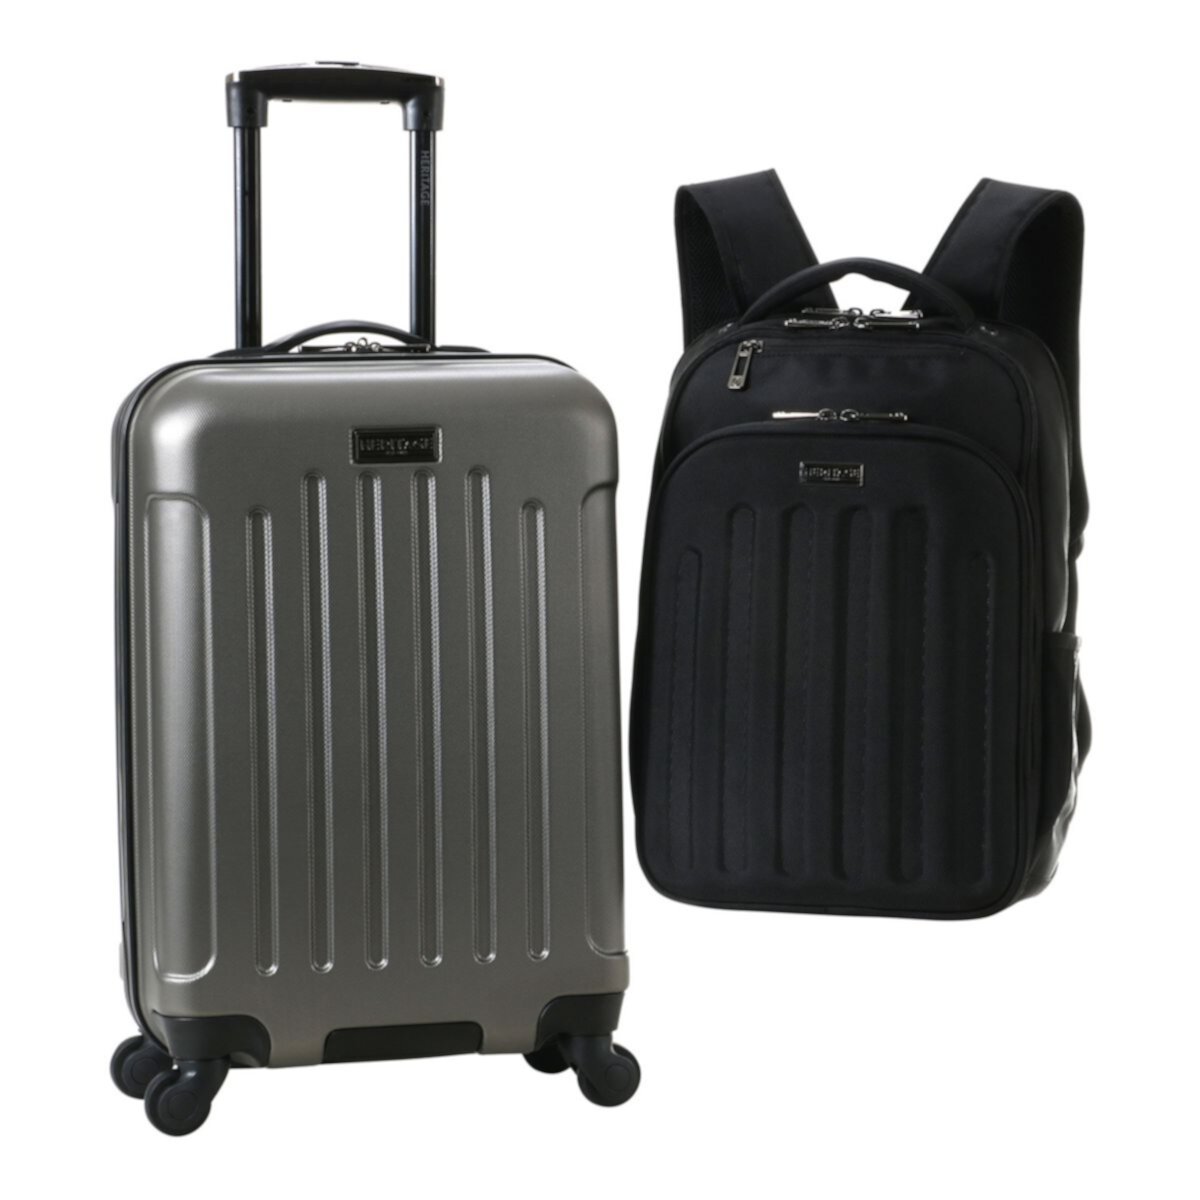 Комплект багажа и рюкзака Hardside Spinner из двух предметов Heritage Lincoln Park Heritage